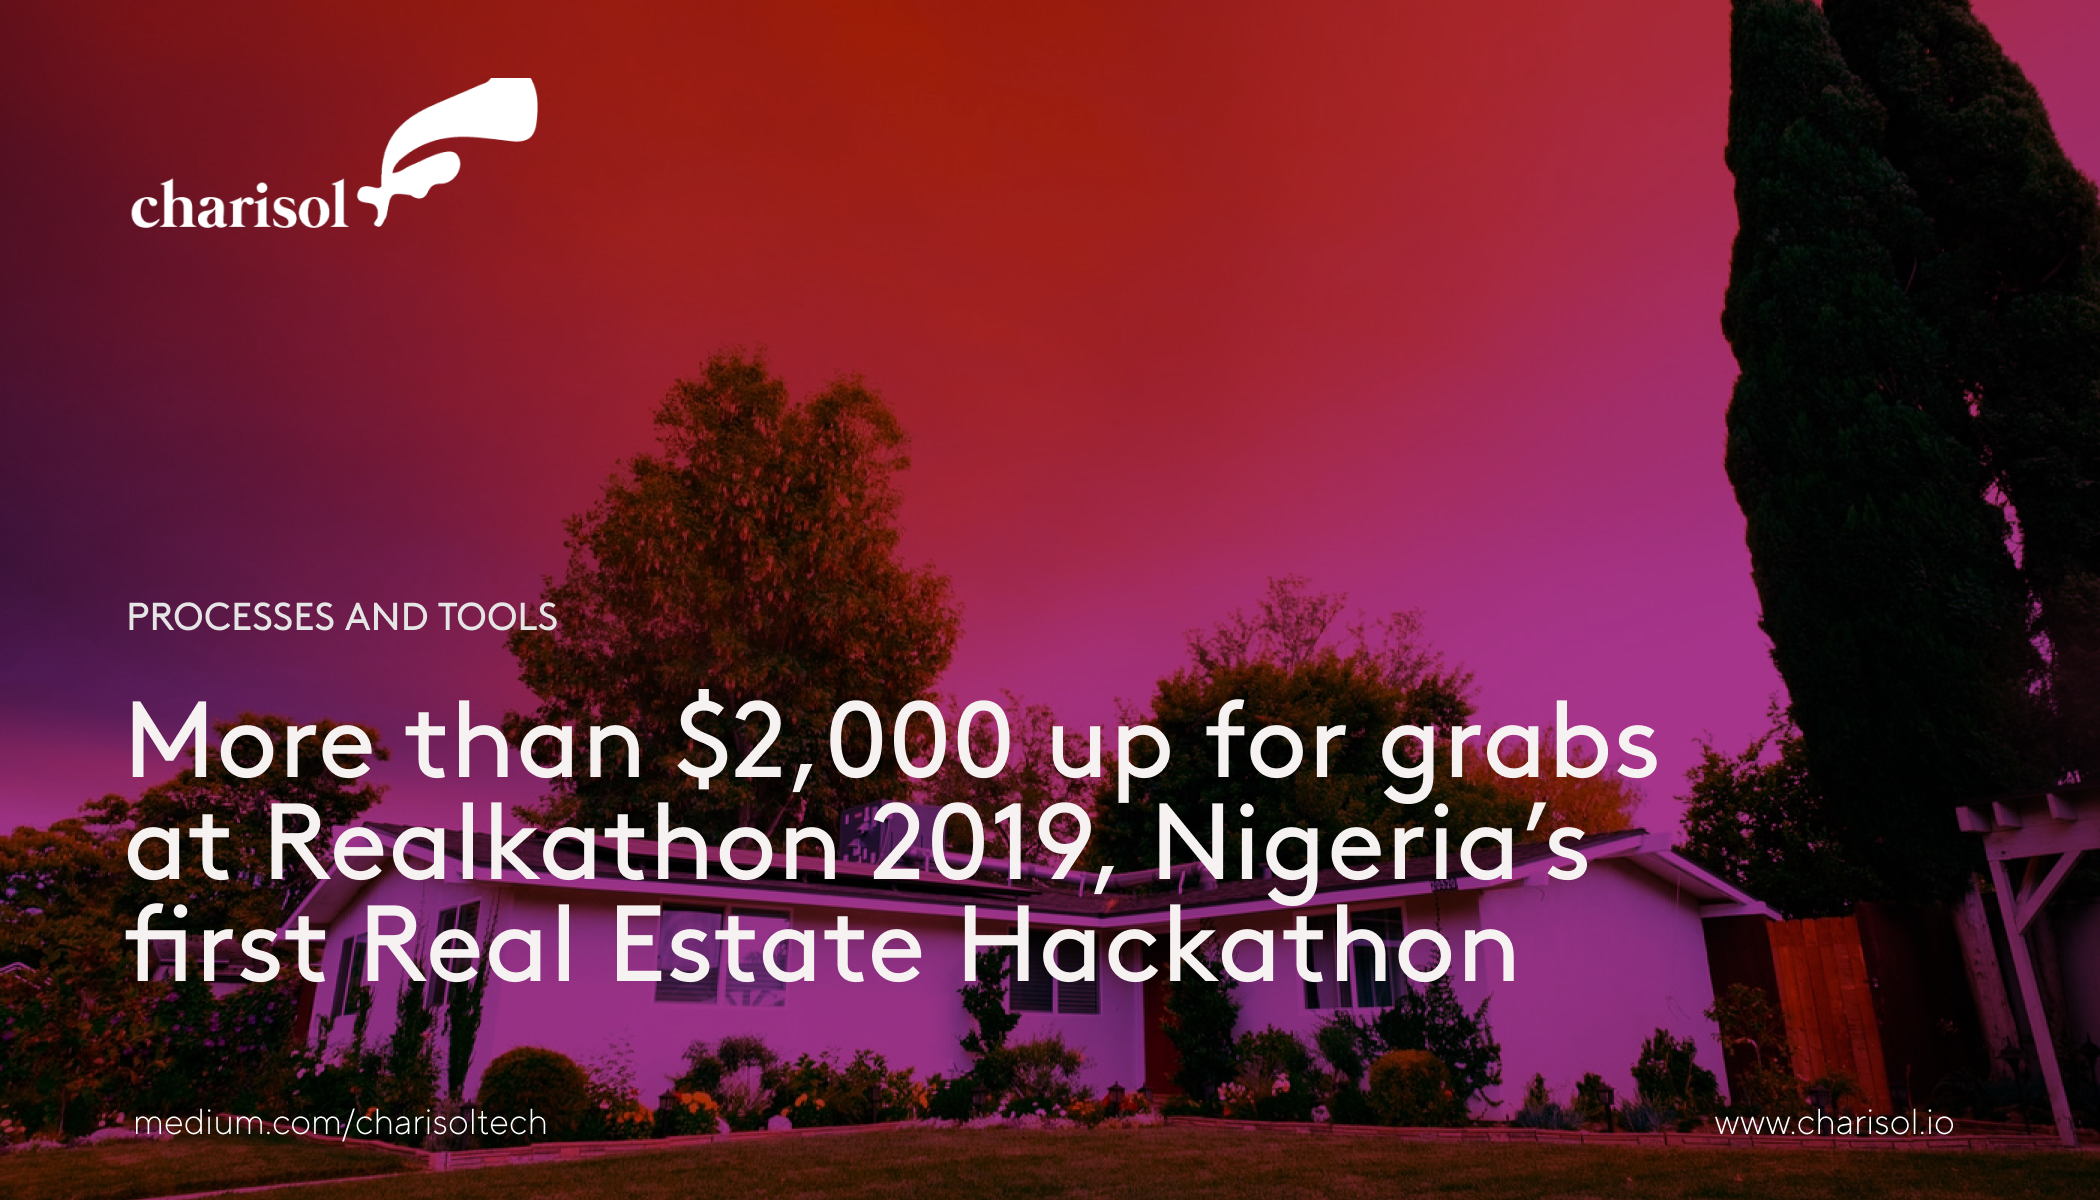 Nigeria first real estate Hackathon